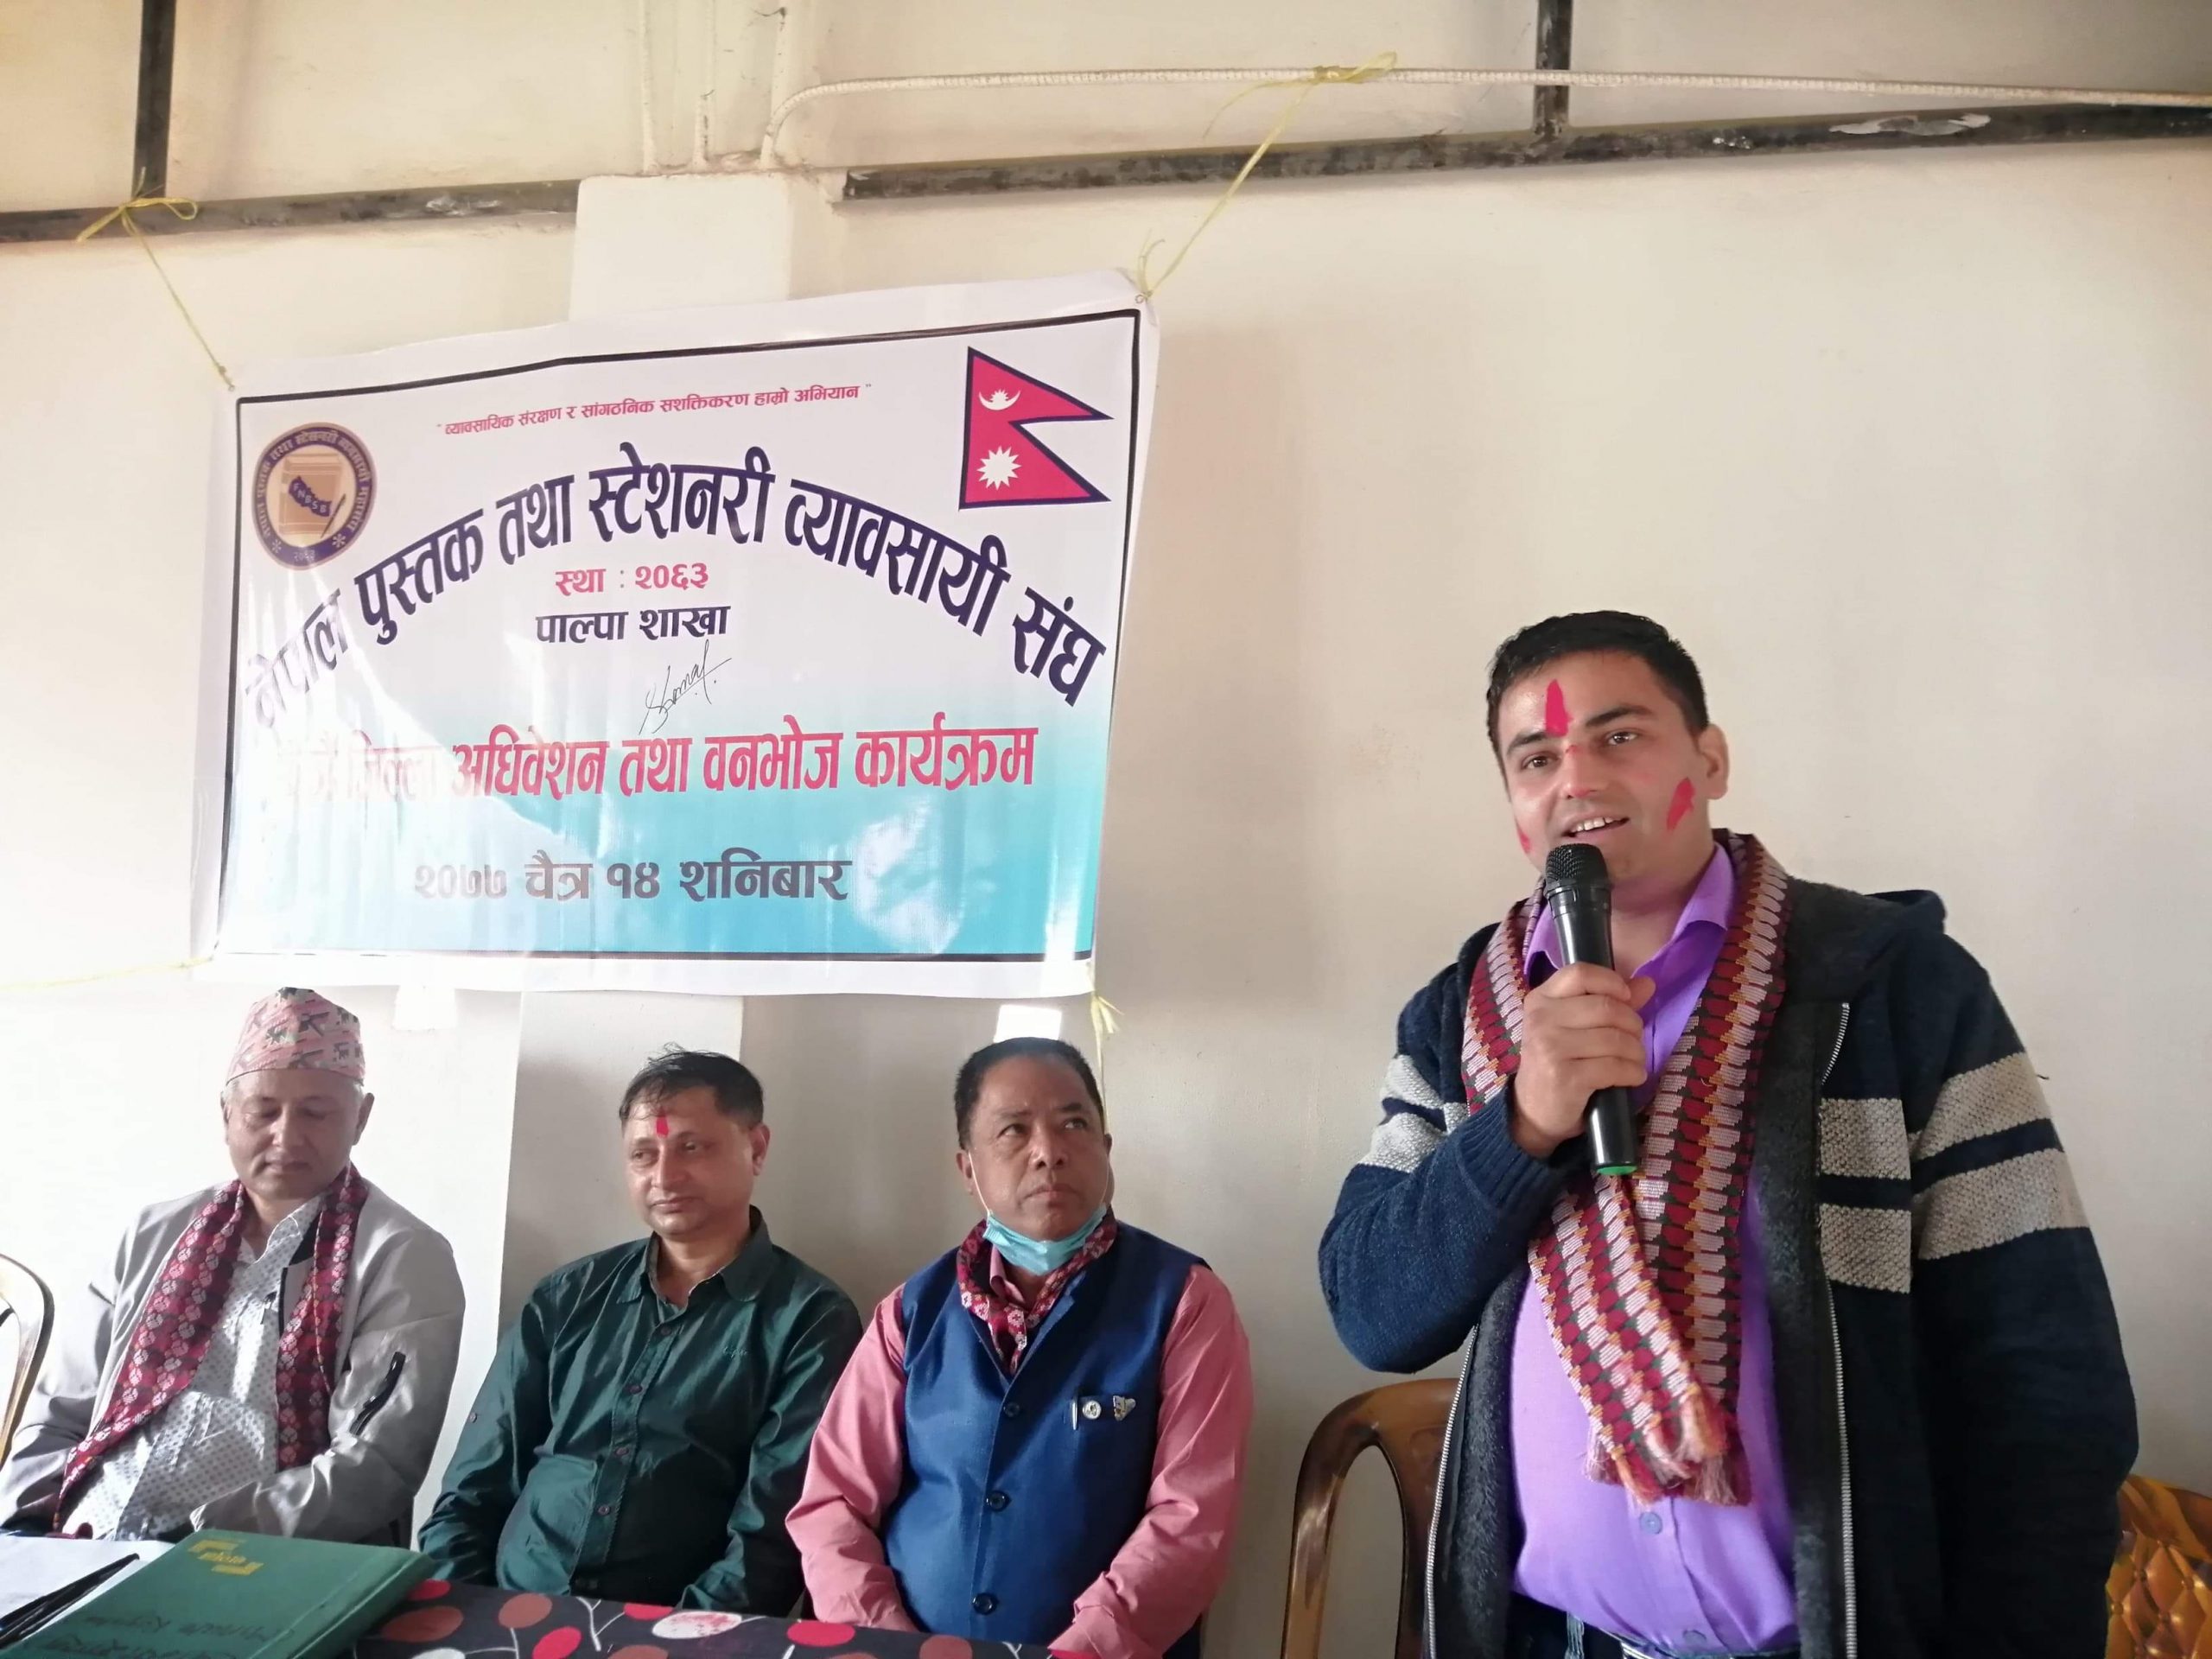 नेपाल पुस्तक तथा स्टेशनरी संघको छैठौं जिल्ला अधिवेशन तथा वनभाेज कार्यक्रम सम्पन्न